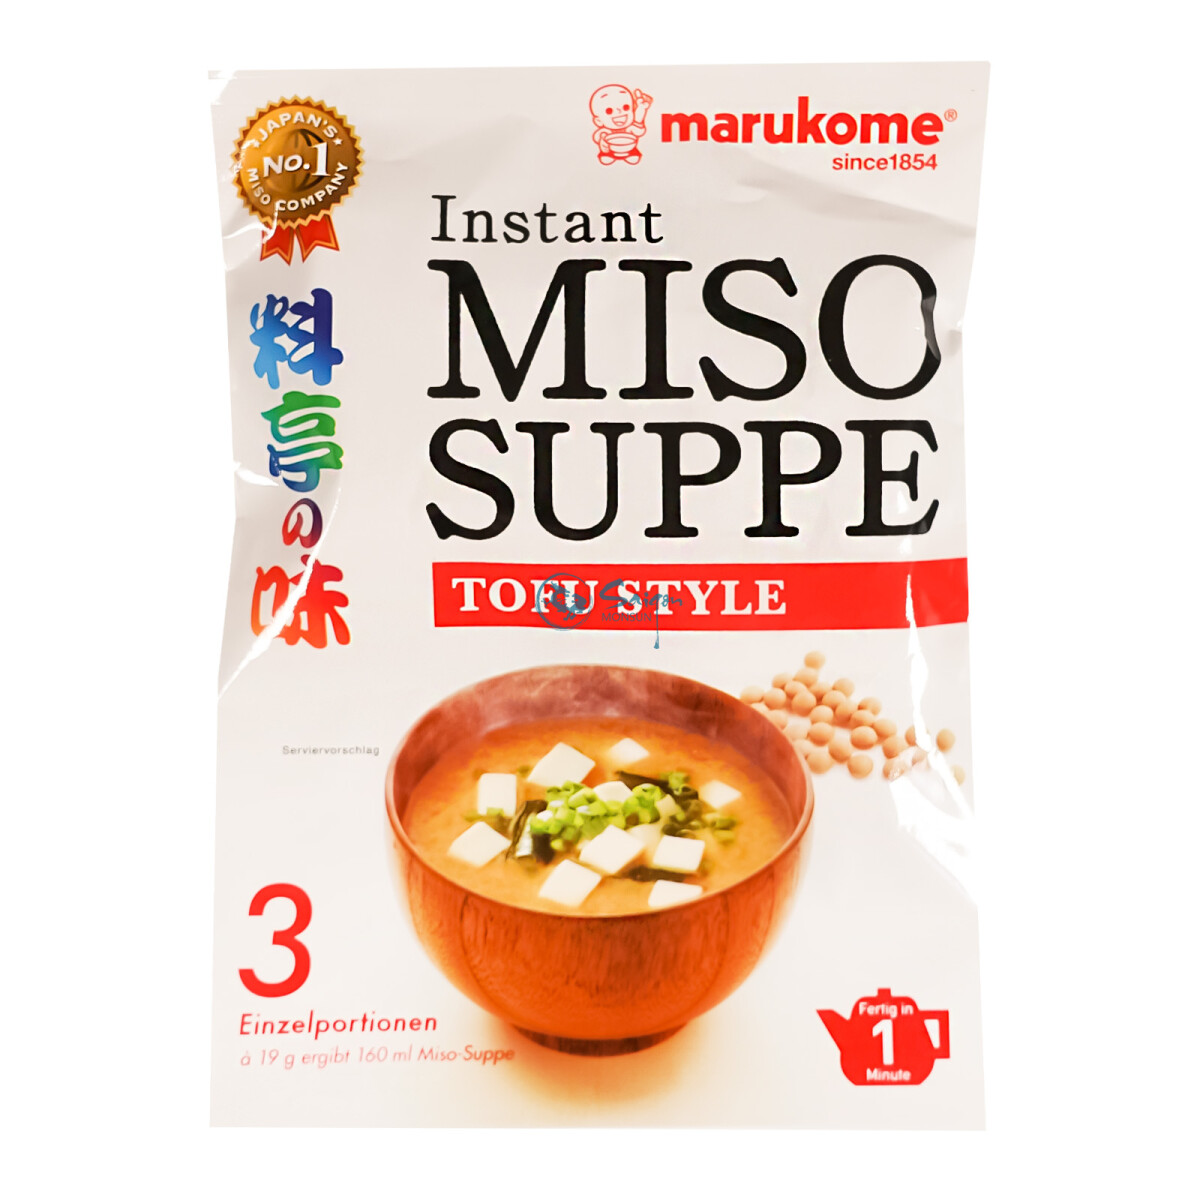 Marukome Misosuppe Tofu Style 57g (3Portionen)